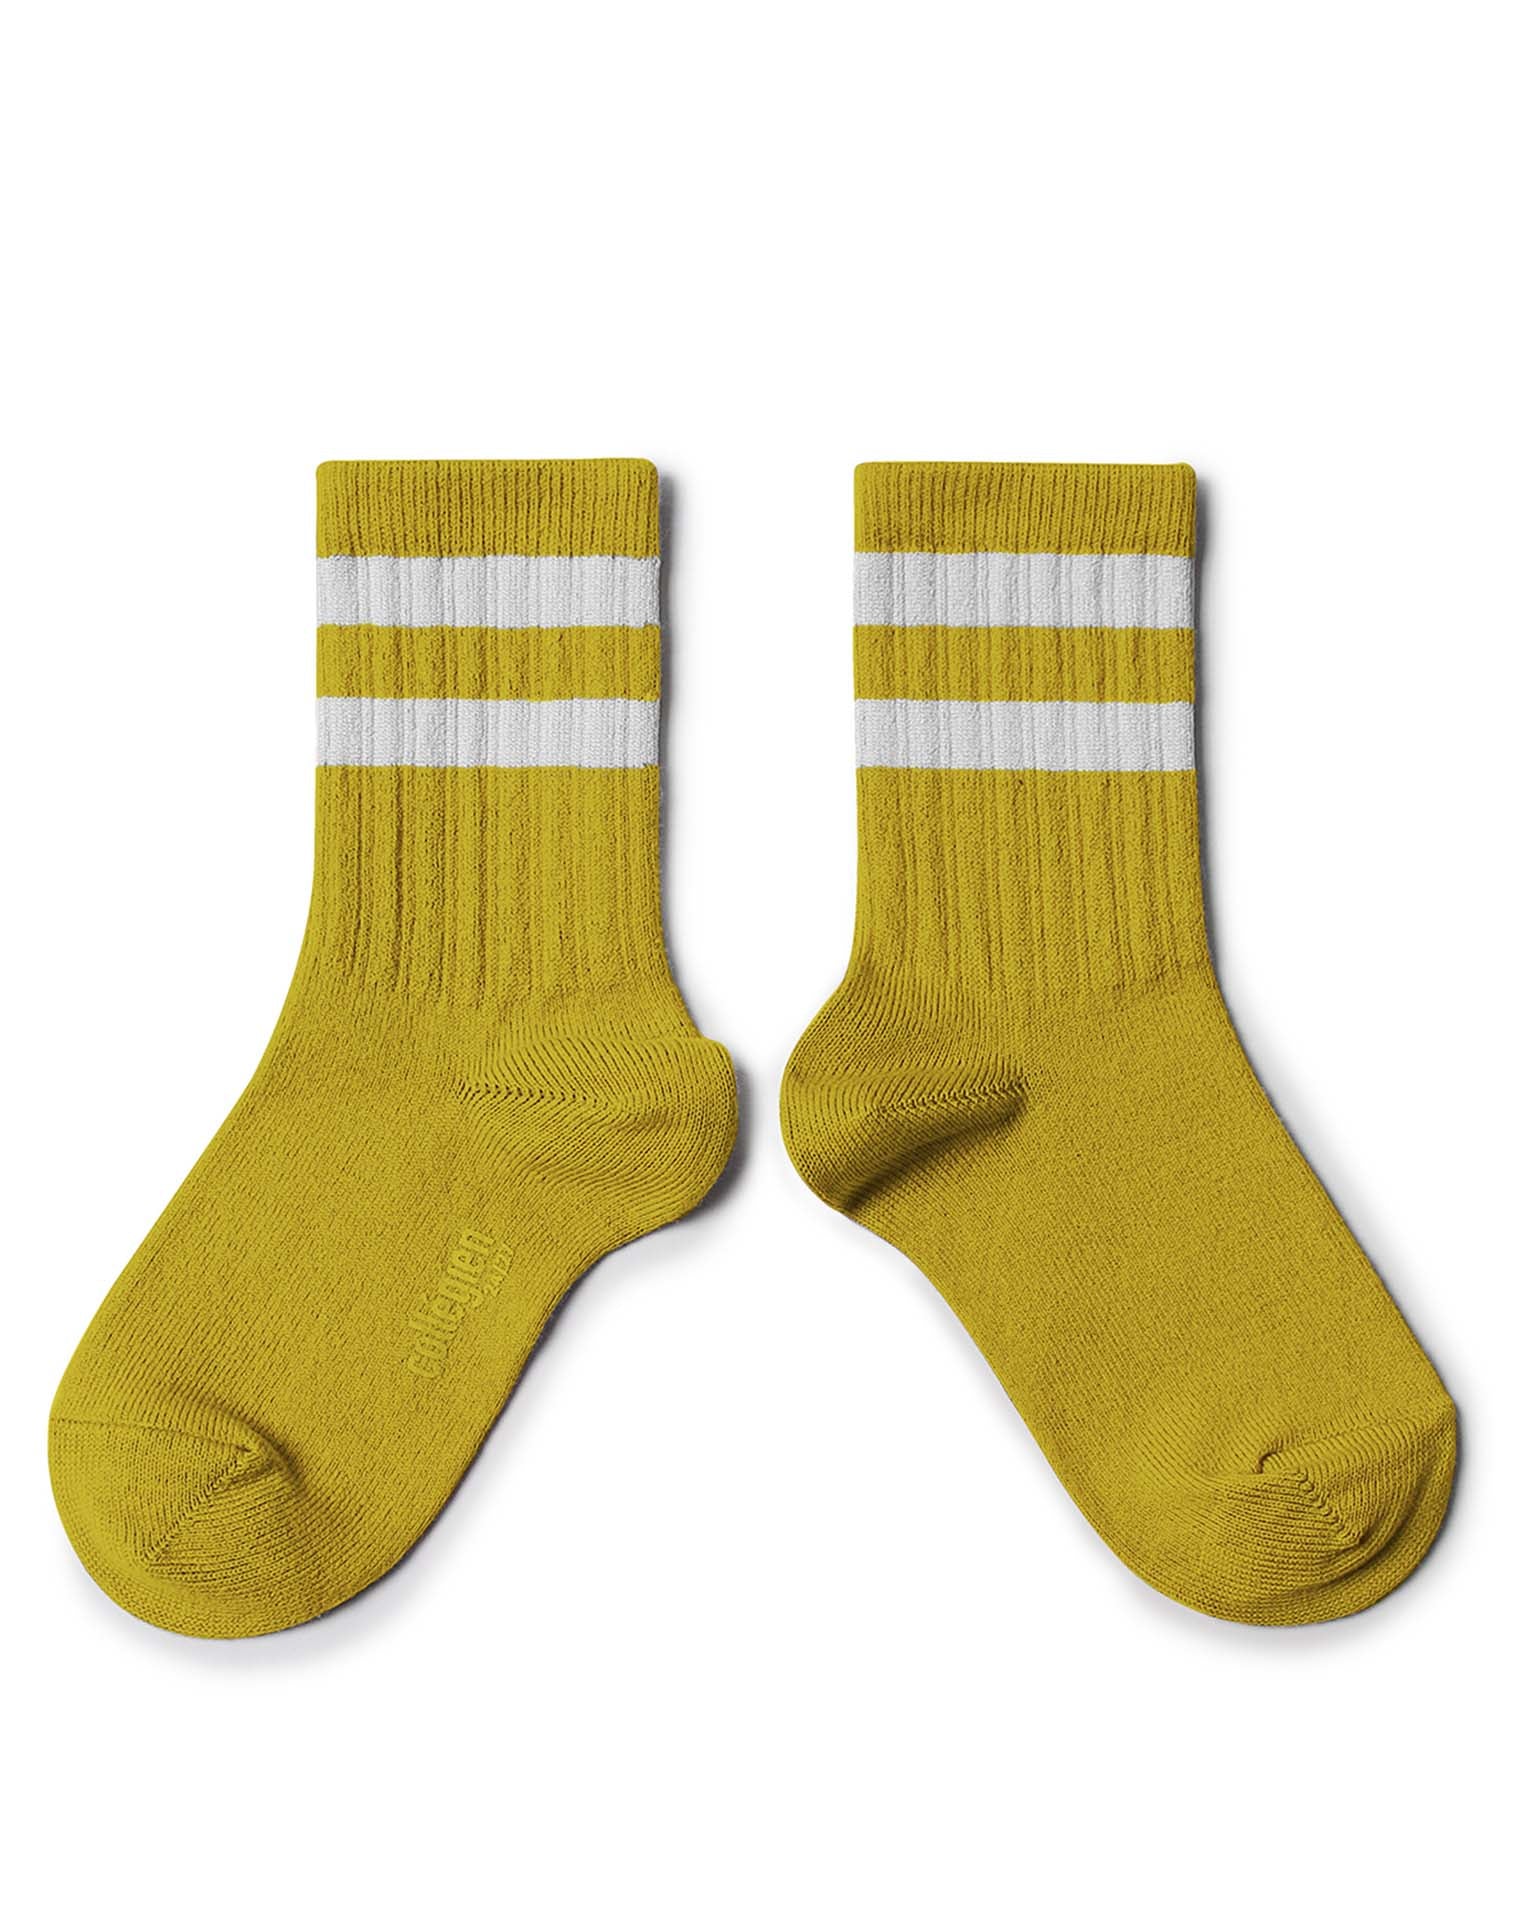 Little collégien accessories nico crew socks in kiwi doré